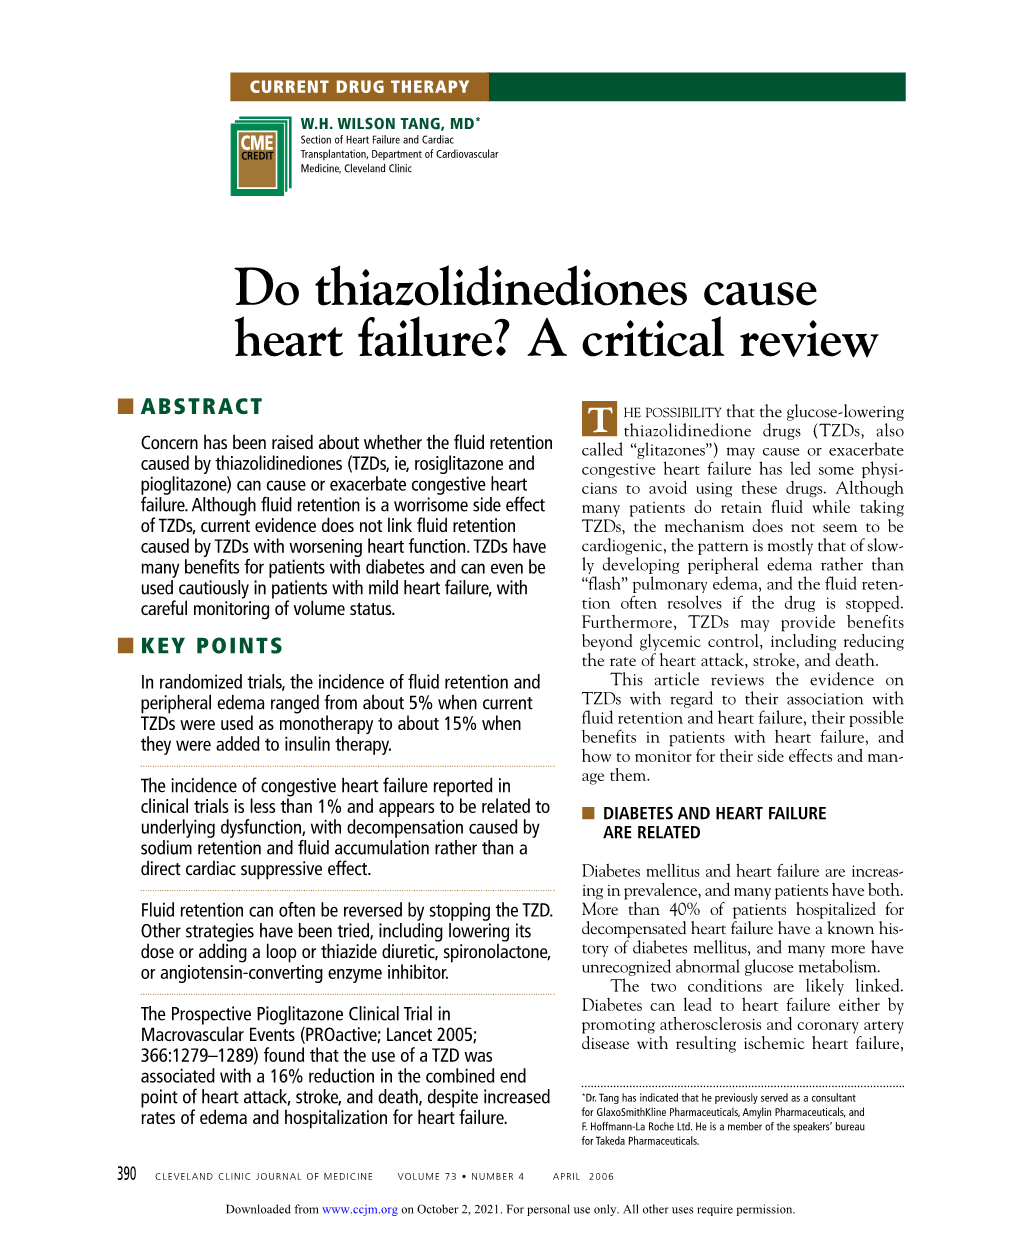 Do Thiazolidinediones Cause Heart Failure? a Critical Review